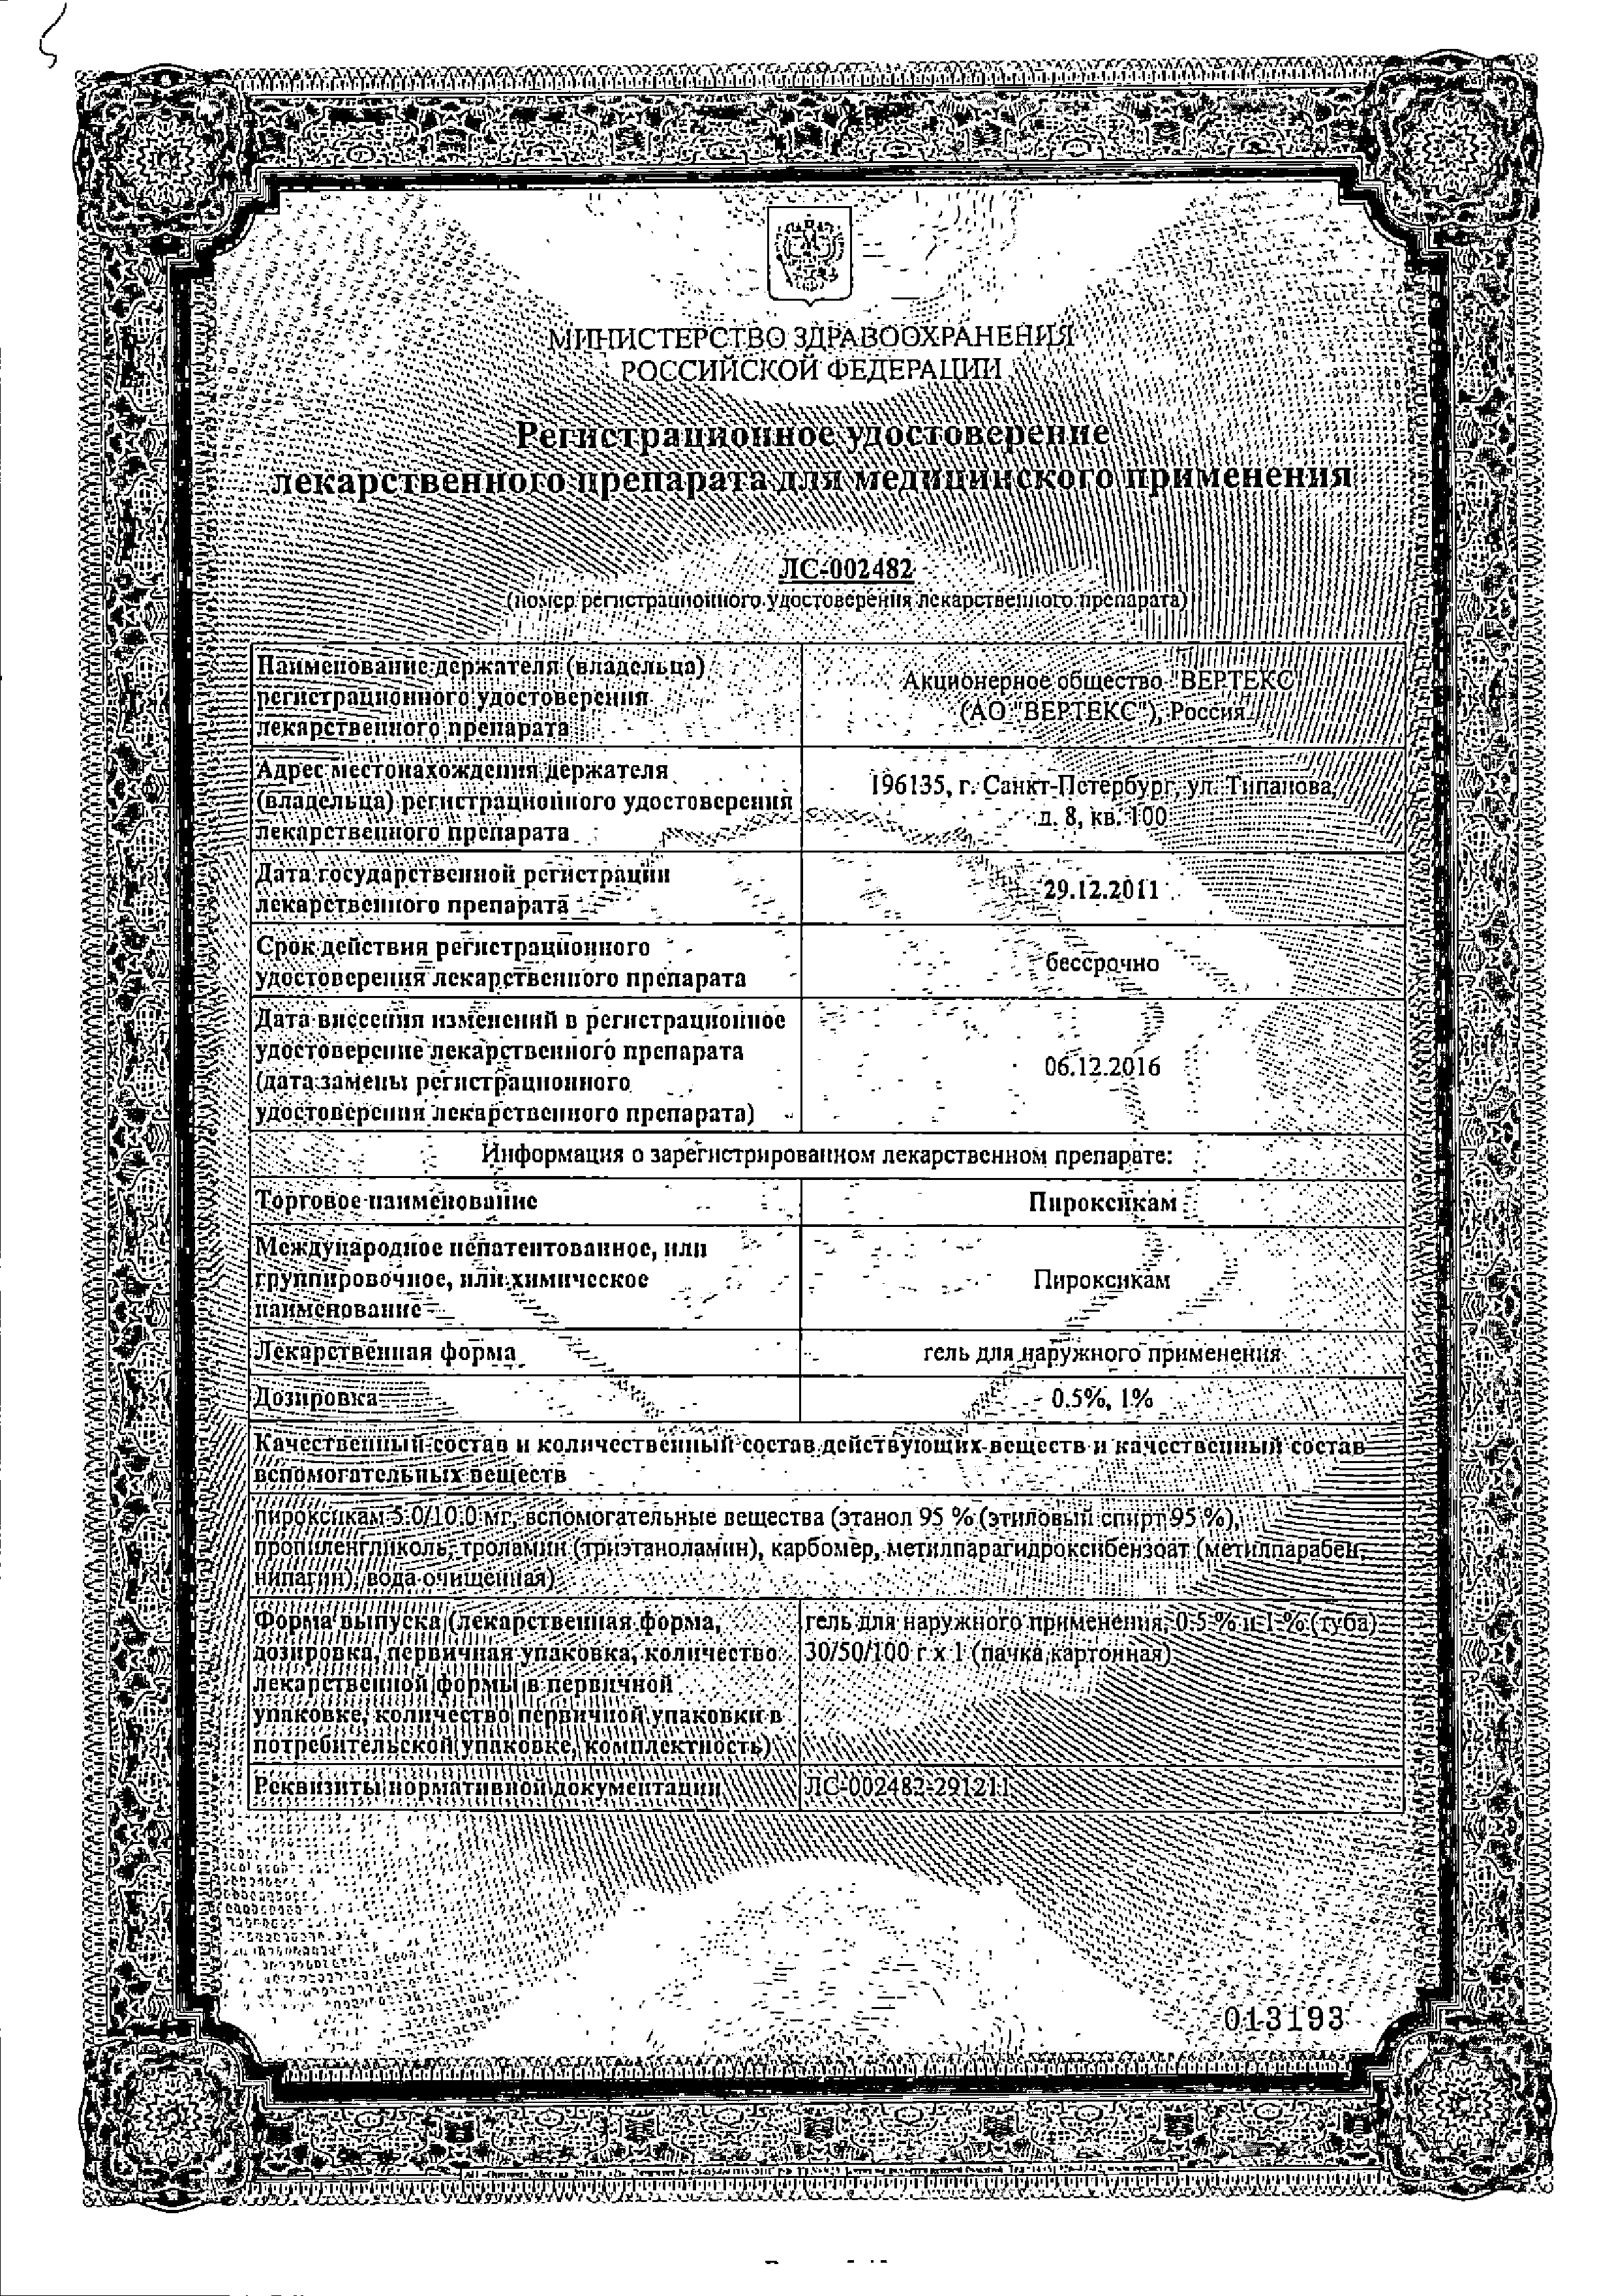 Пироксикам сертификат